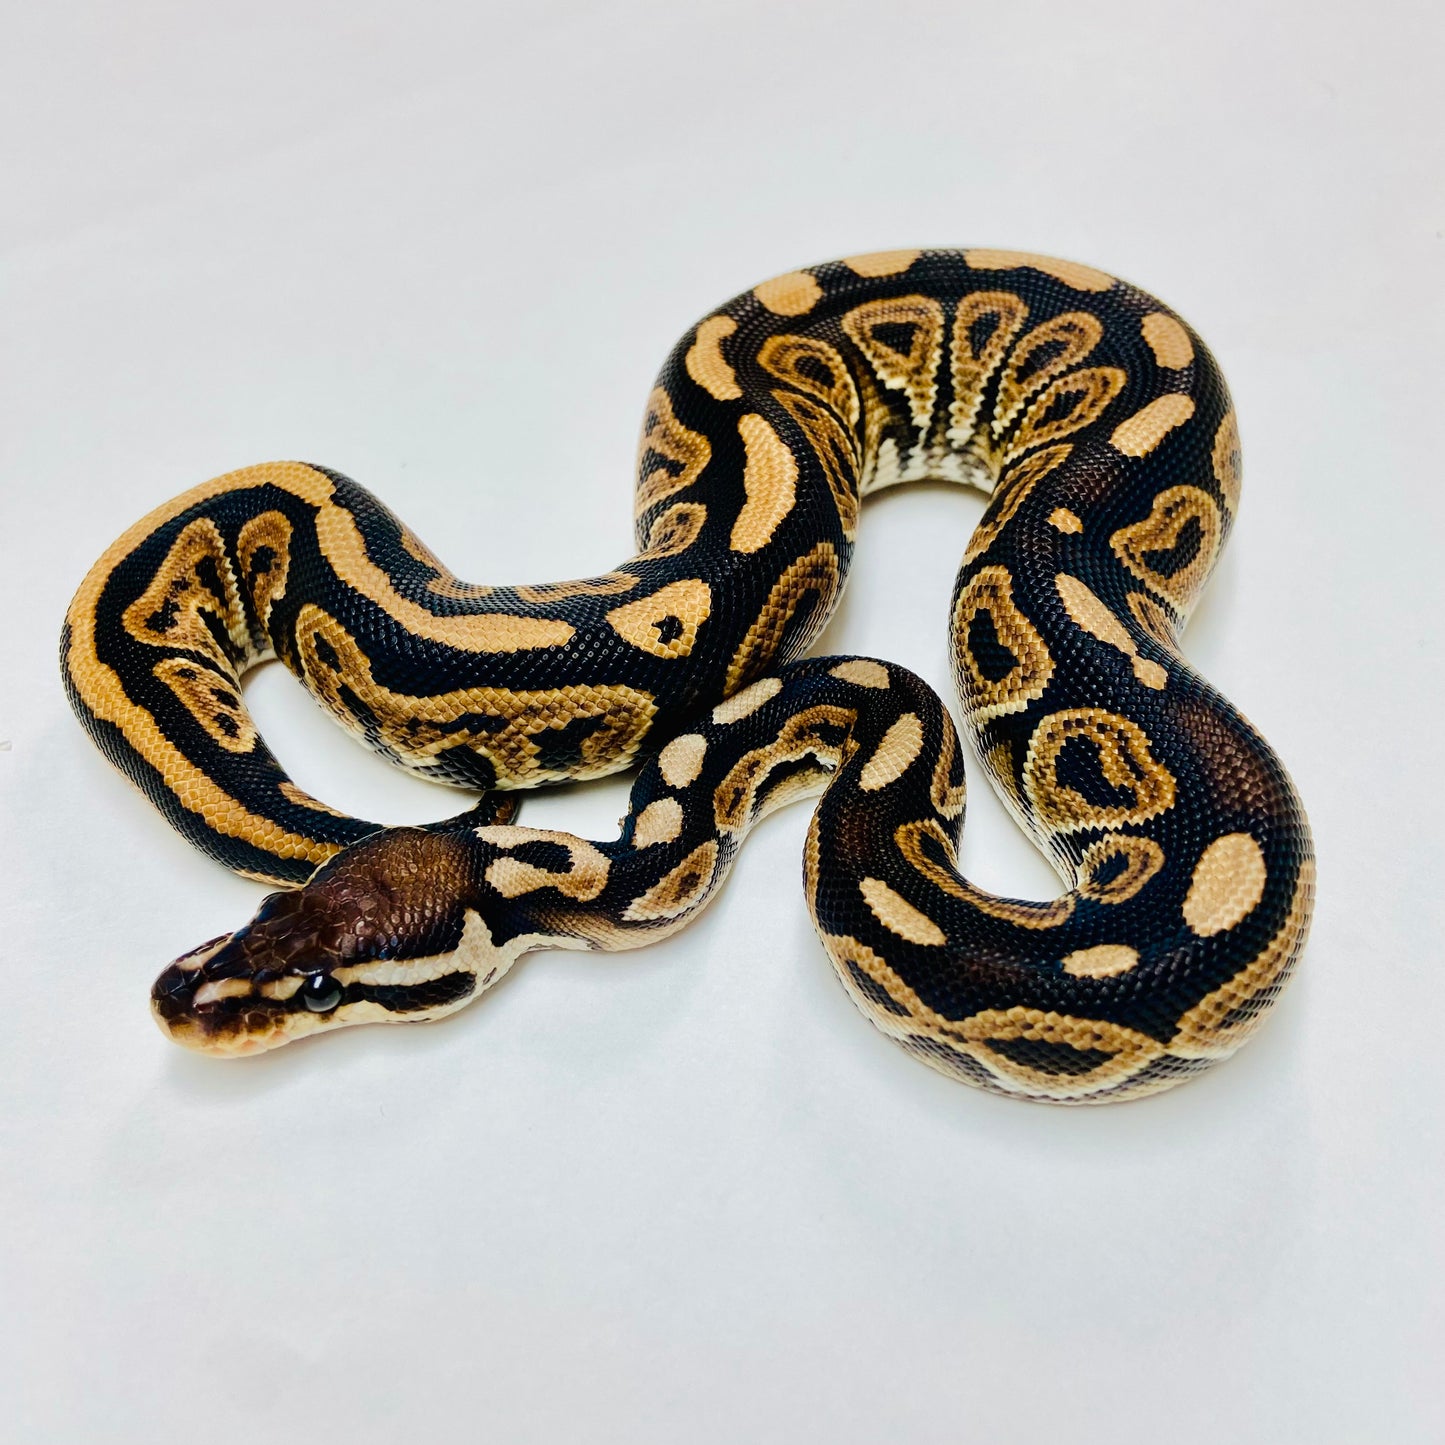 Black Pastel Ball Python- Male #2023M04